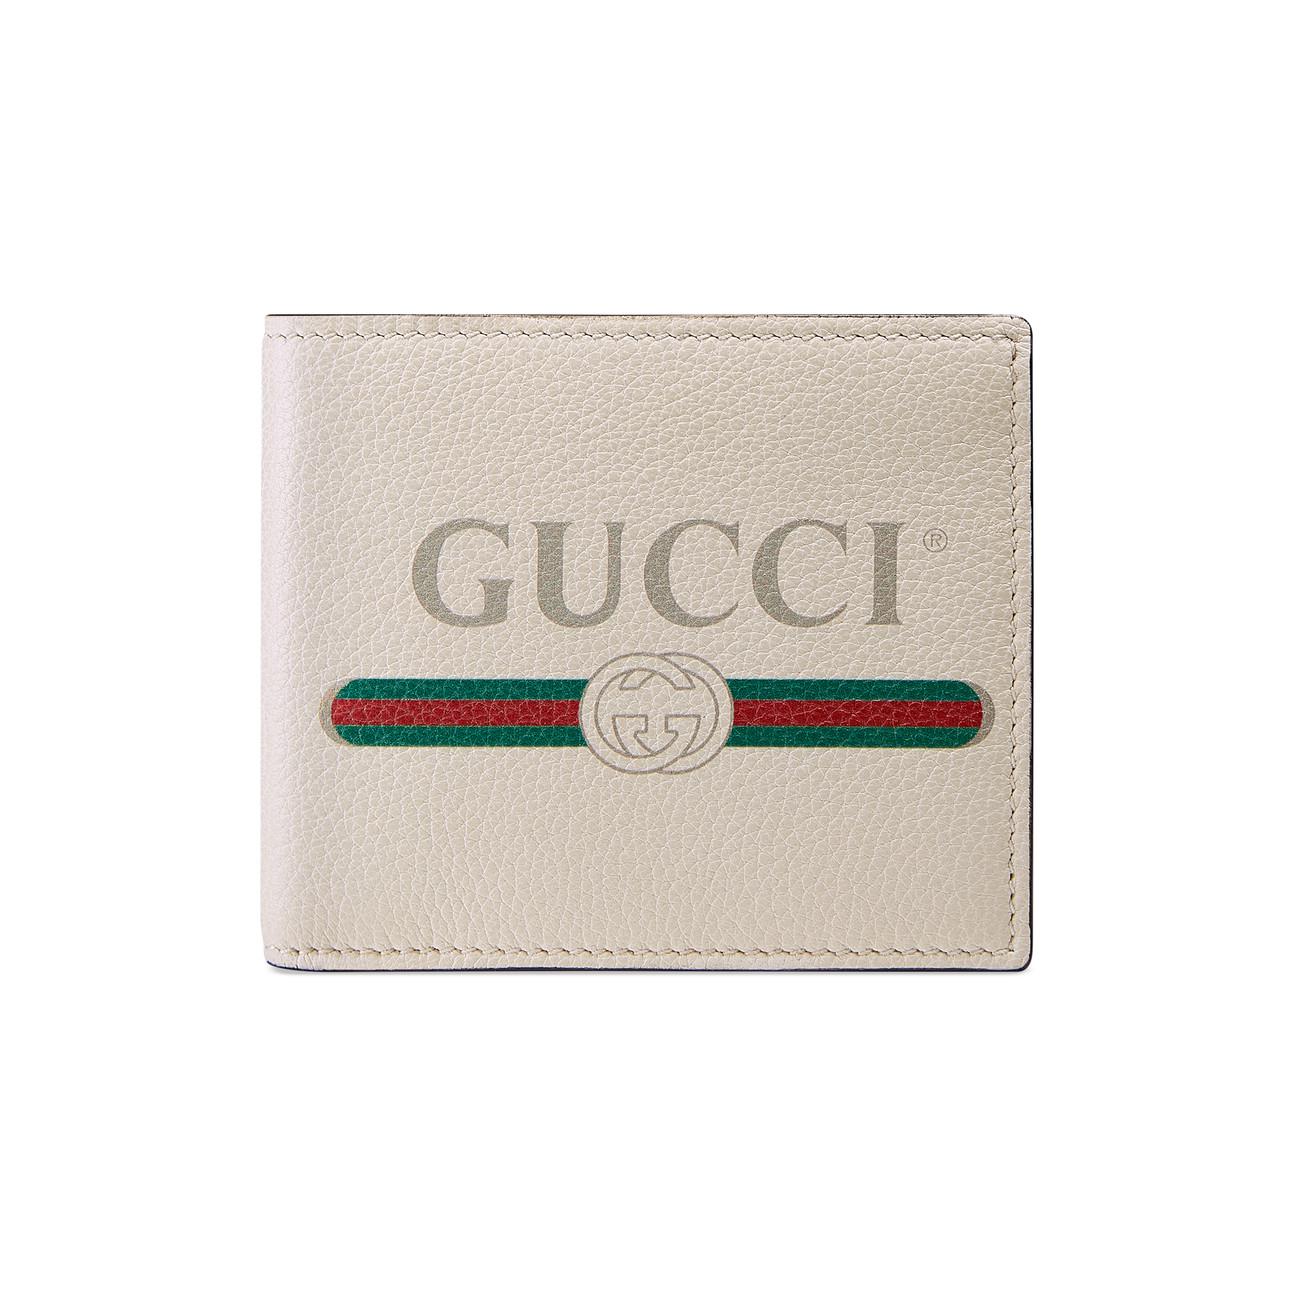 Gucci Print Leather Bi-fold Wallet in 